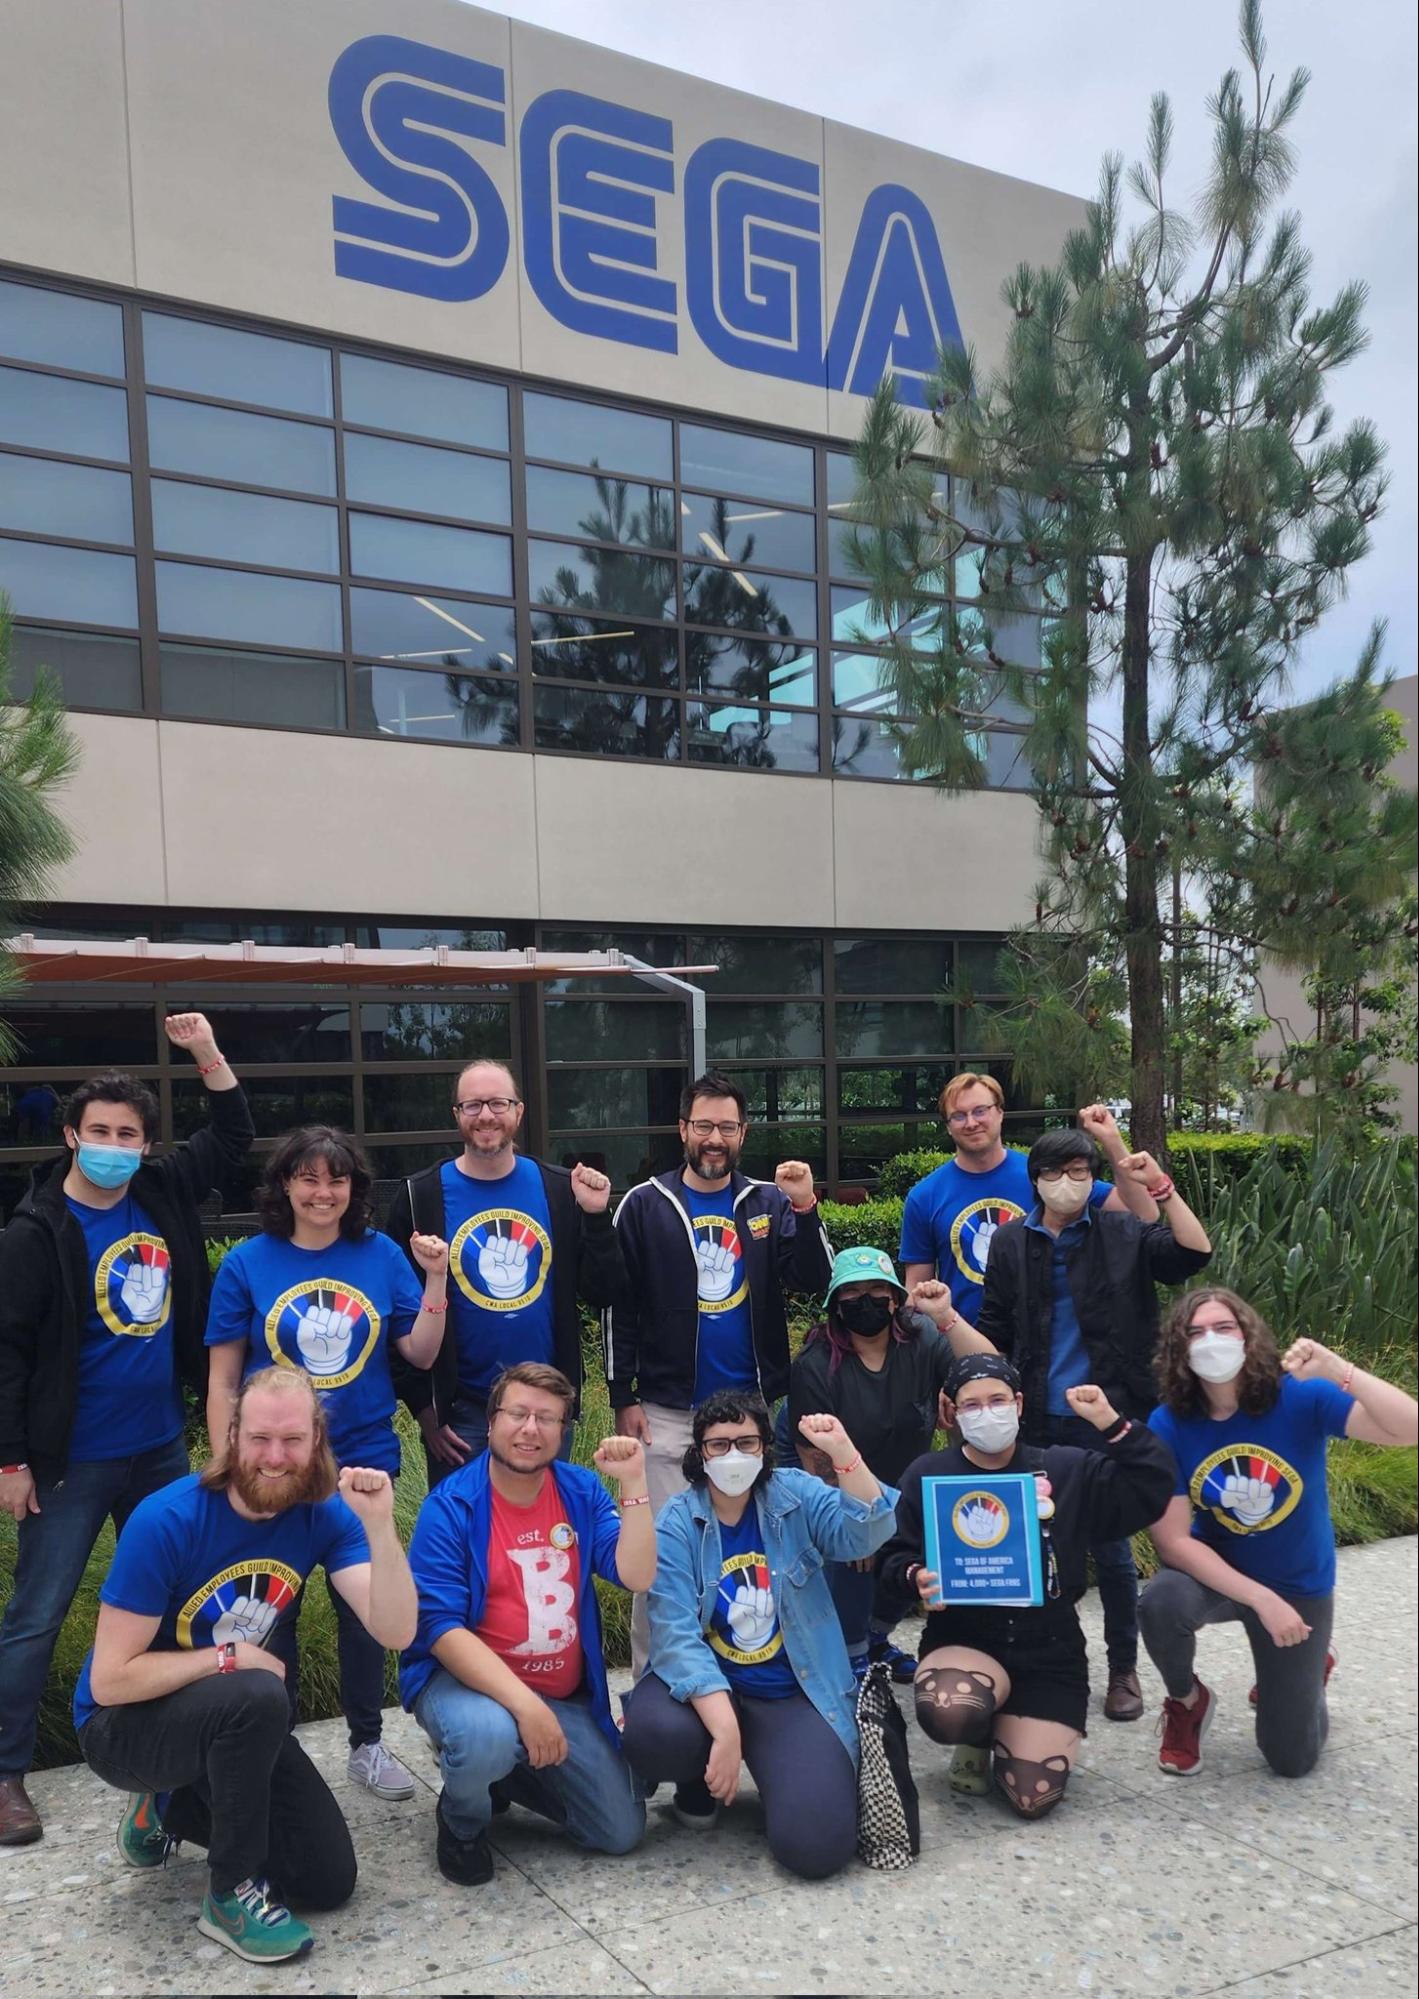 Members of Allied Employees Guild Improving Sega (AEGIS)